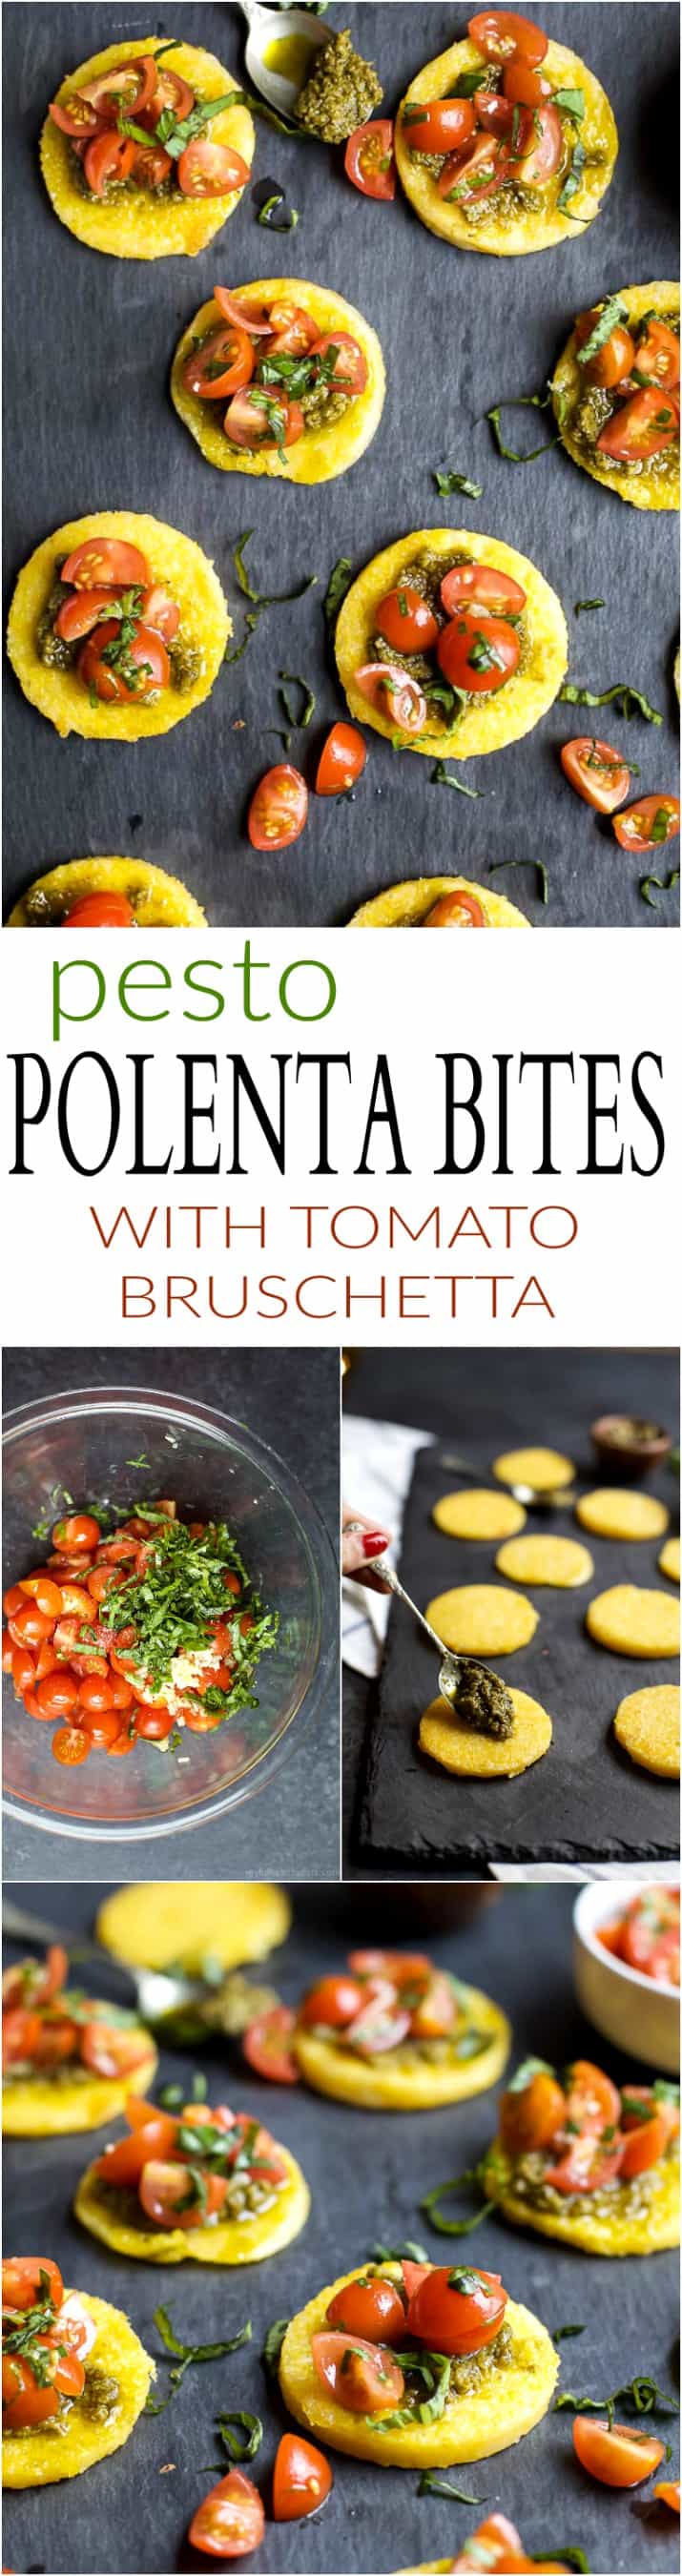 4 Images of Pesto Polenta Bites with Tomato Bruschetta